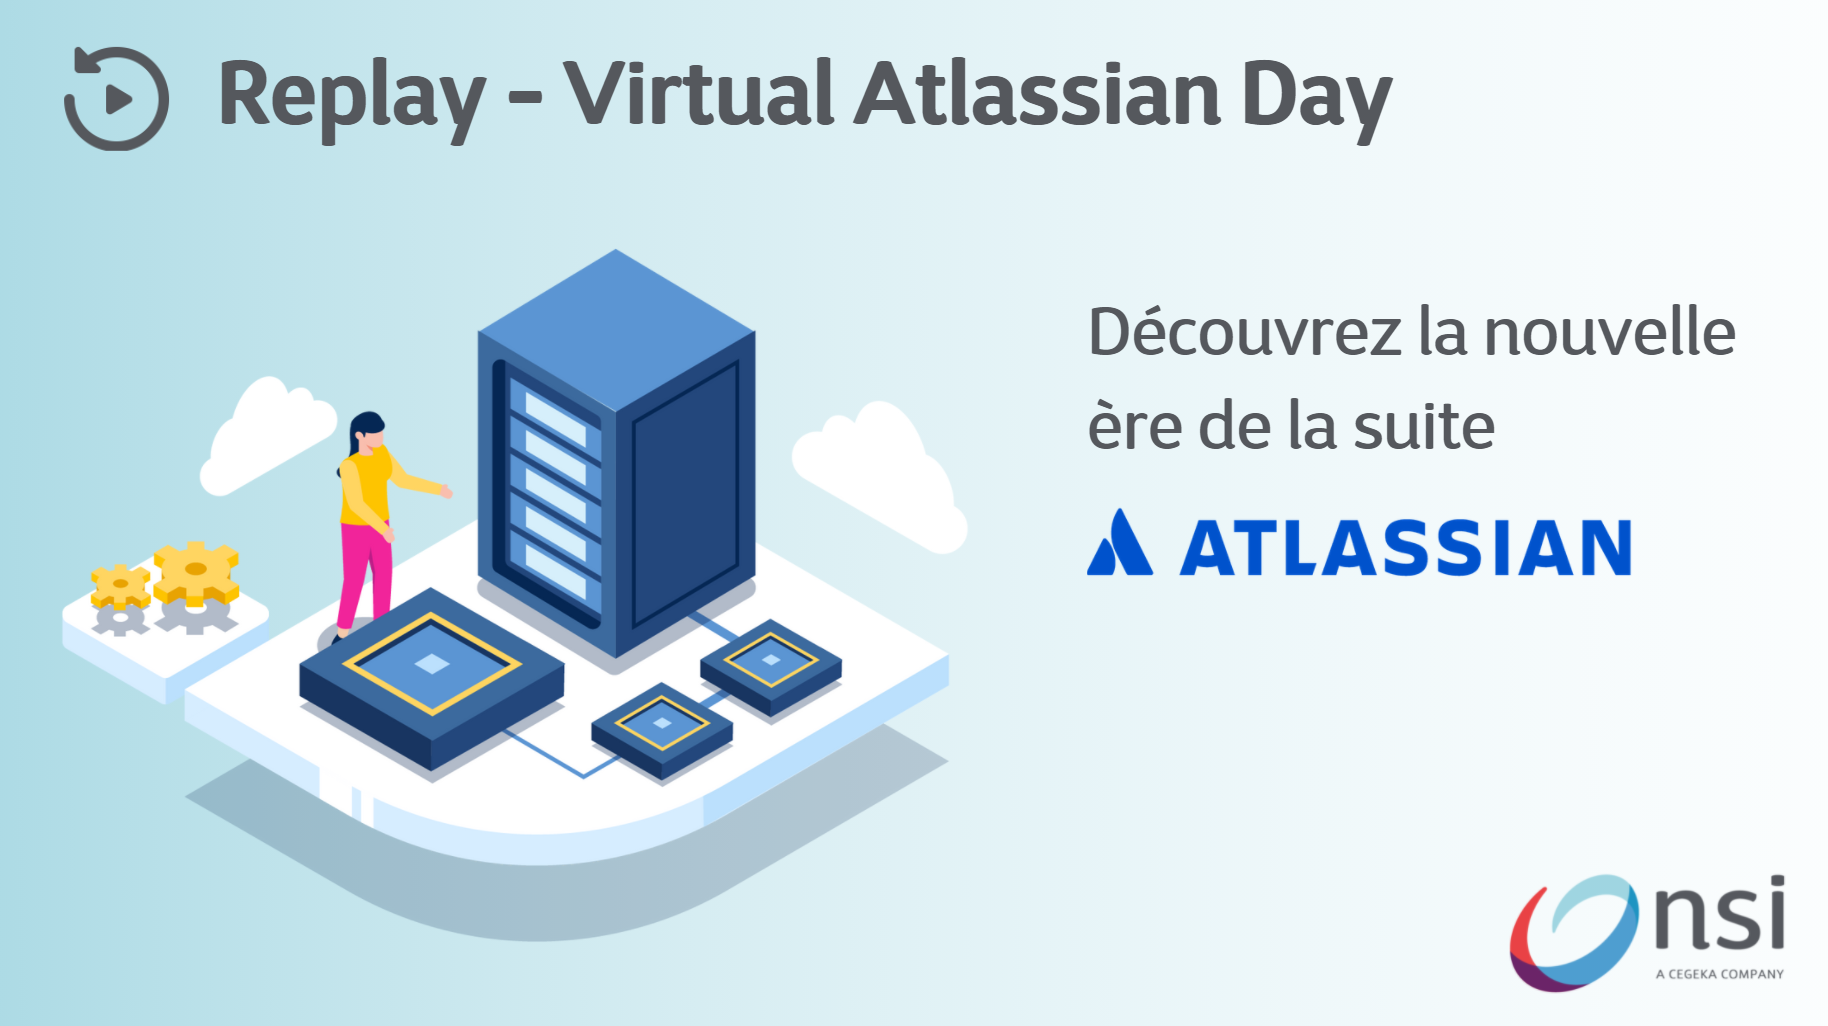 Replay partie 1 Atlassian Virtual Day